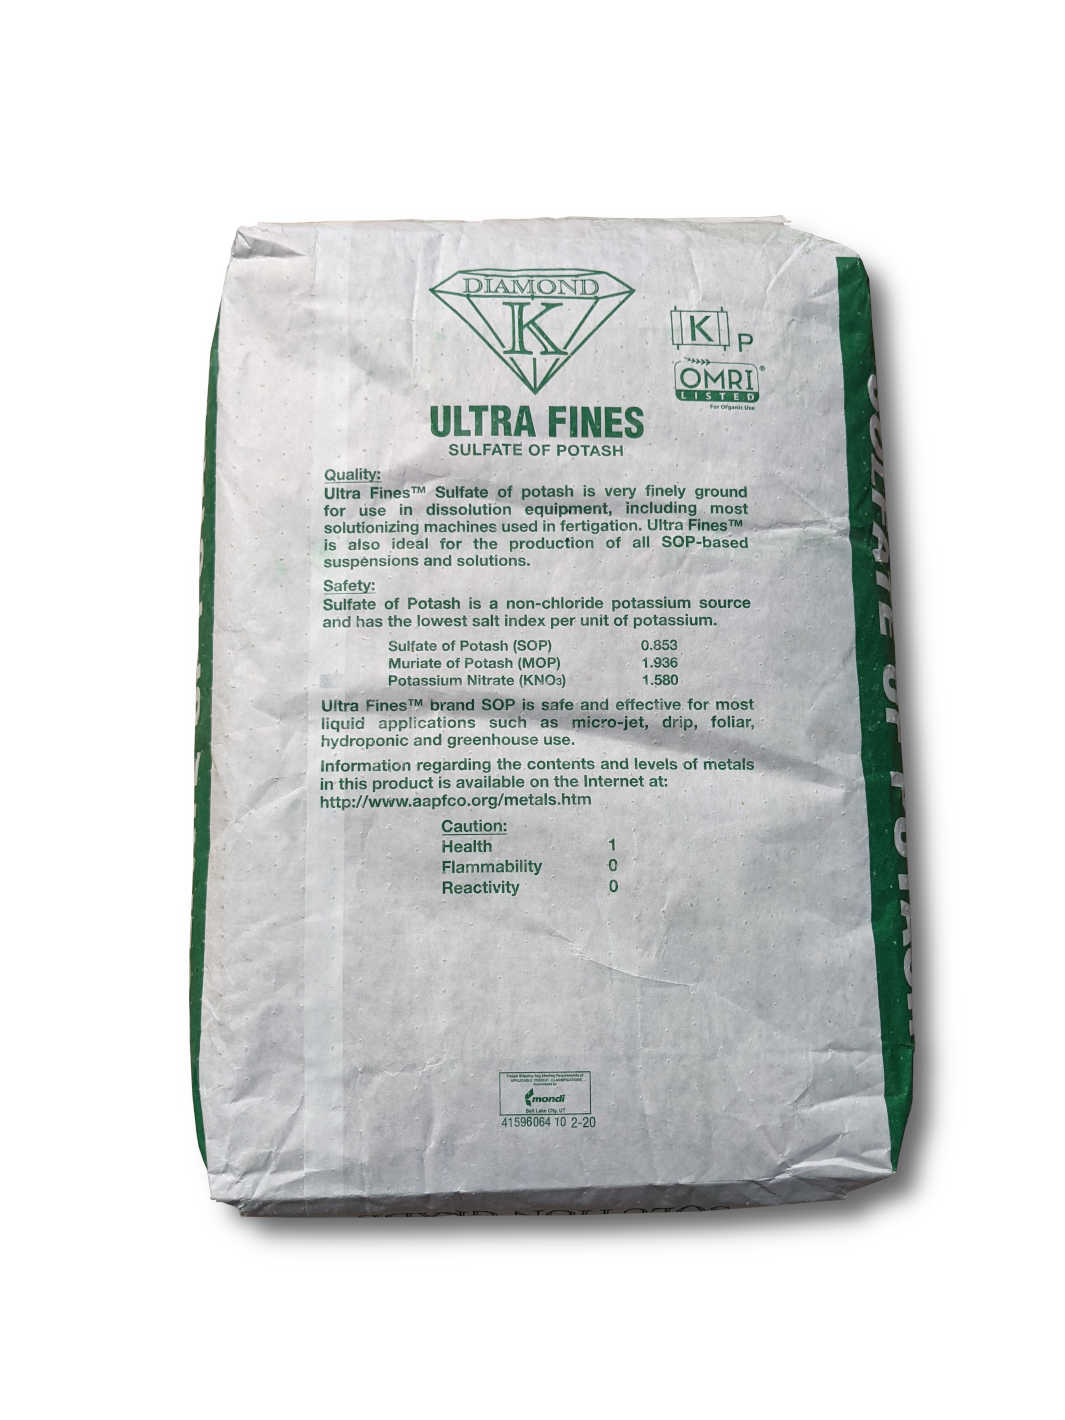 Back of 50lb Bag of Sulfate of Potash Diamond K Ultra Fine Potassium Sulfate